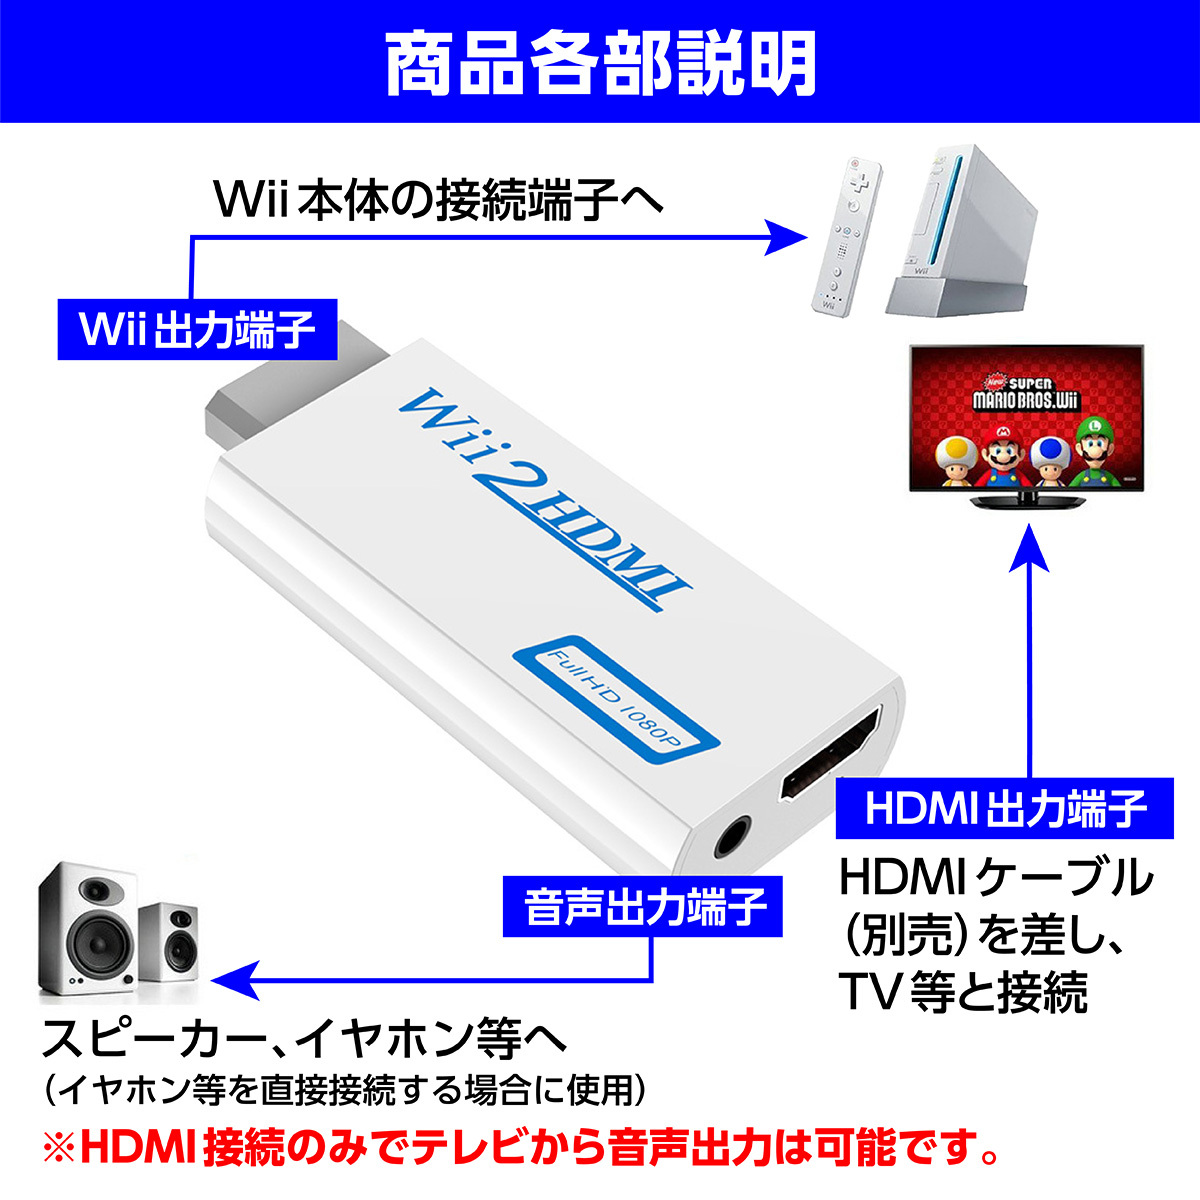 wii to HDMI изменение подключение hdmi изменение адаптер подключение способ корпус телевизор коннектор конвертер 